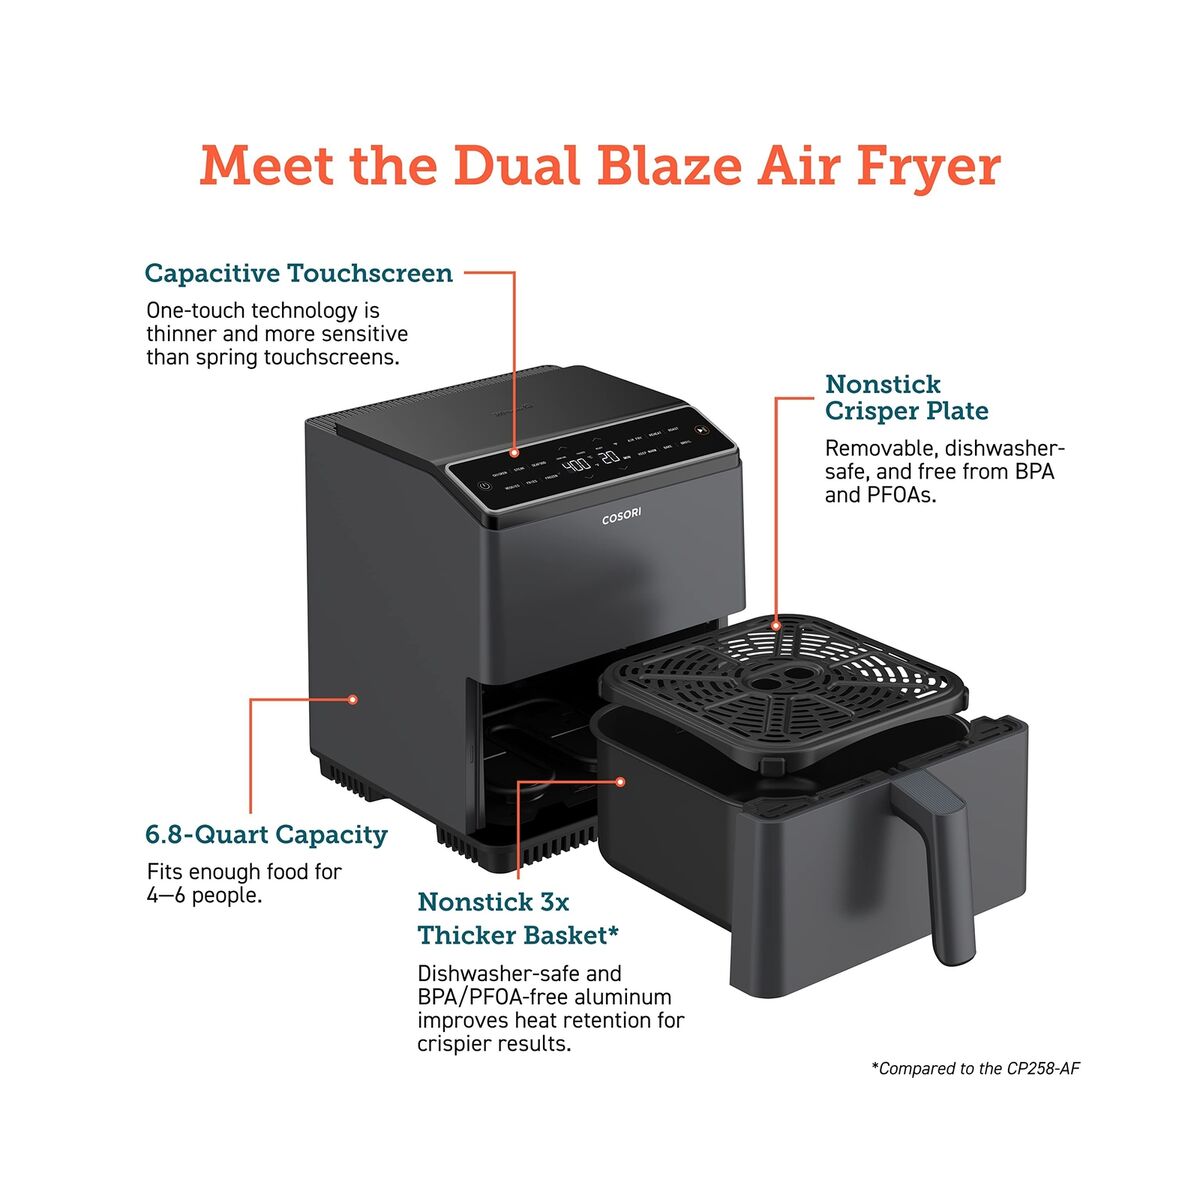 COSORI Dual Blaze 6.8-Quart Smart Air Fryer, Dual Heating Elements